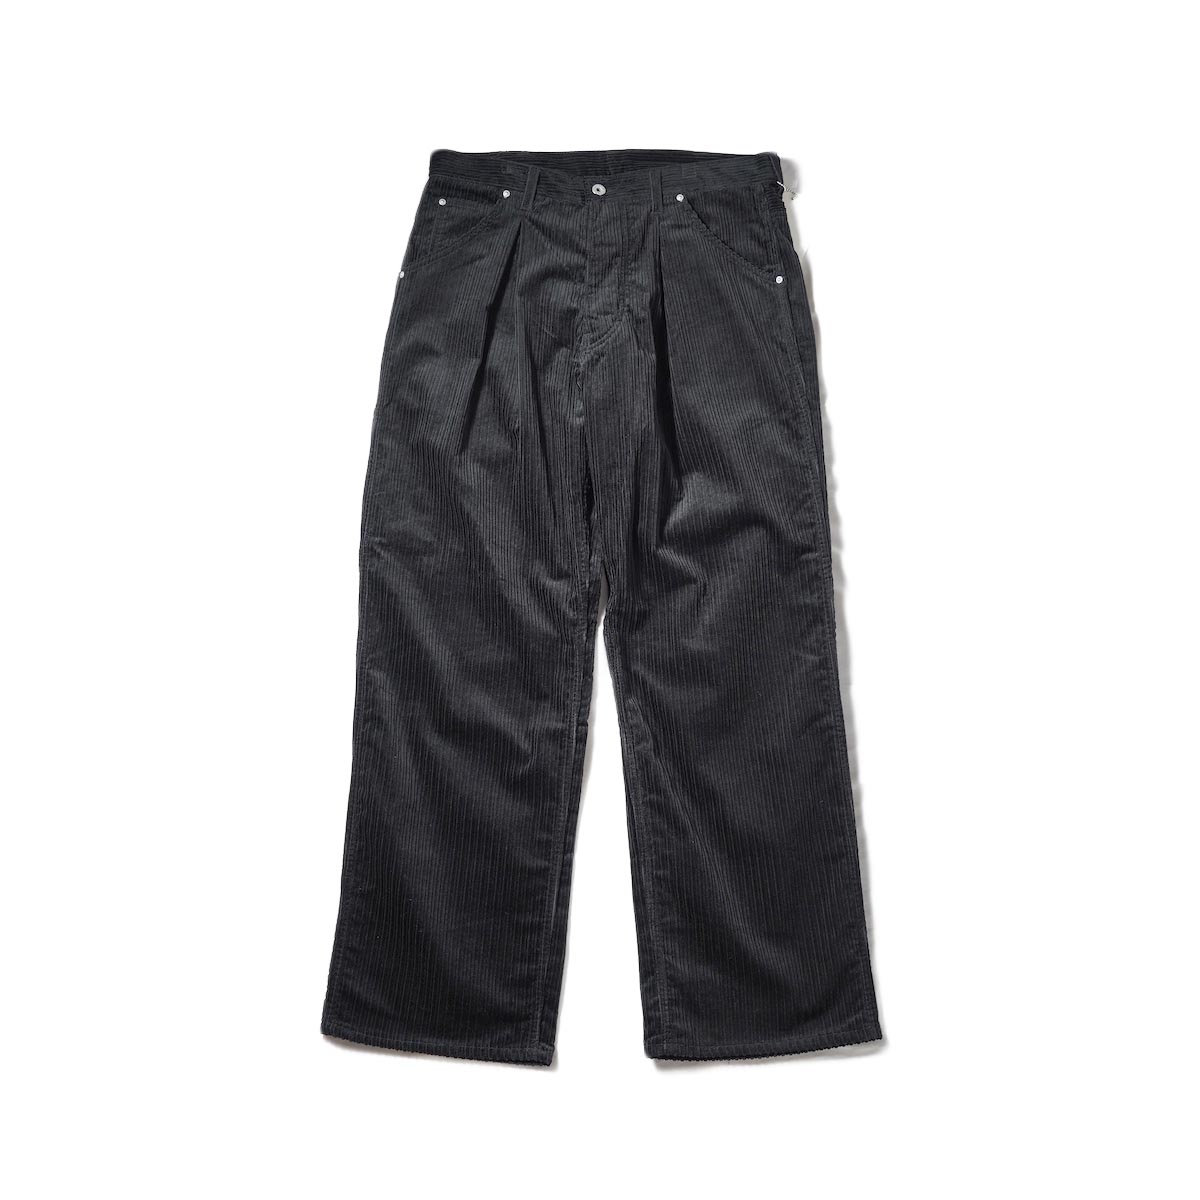 Willow Pants / P-010(77 Pants) Black Corduroy